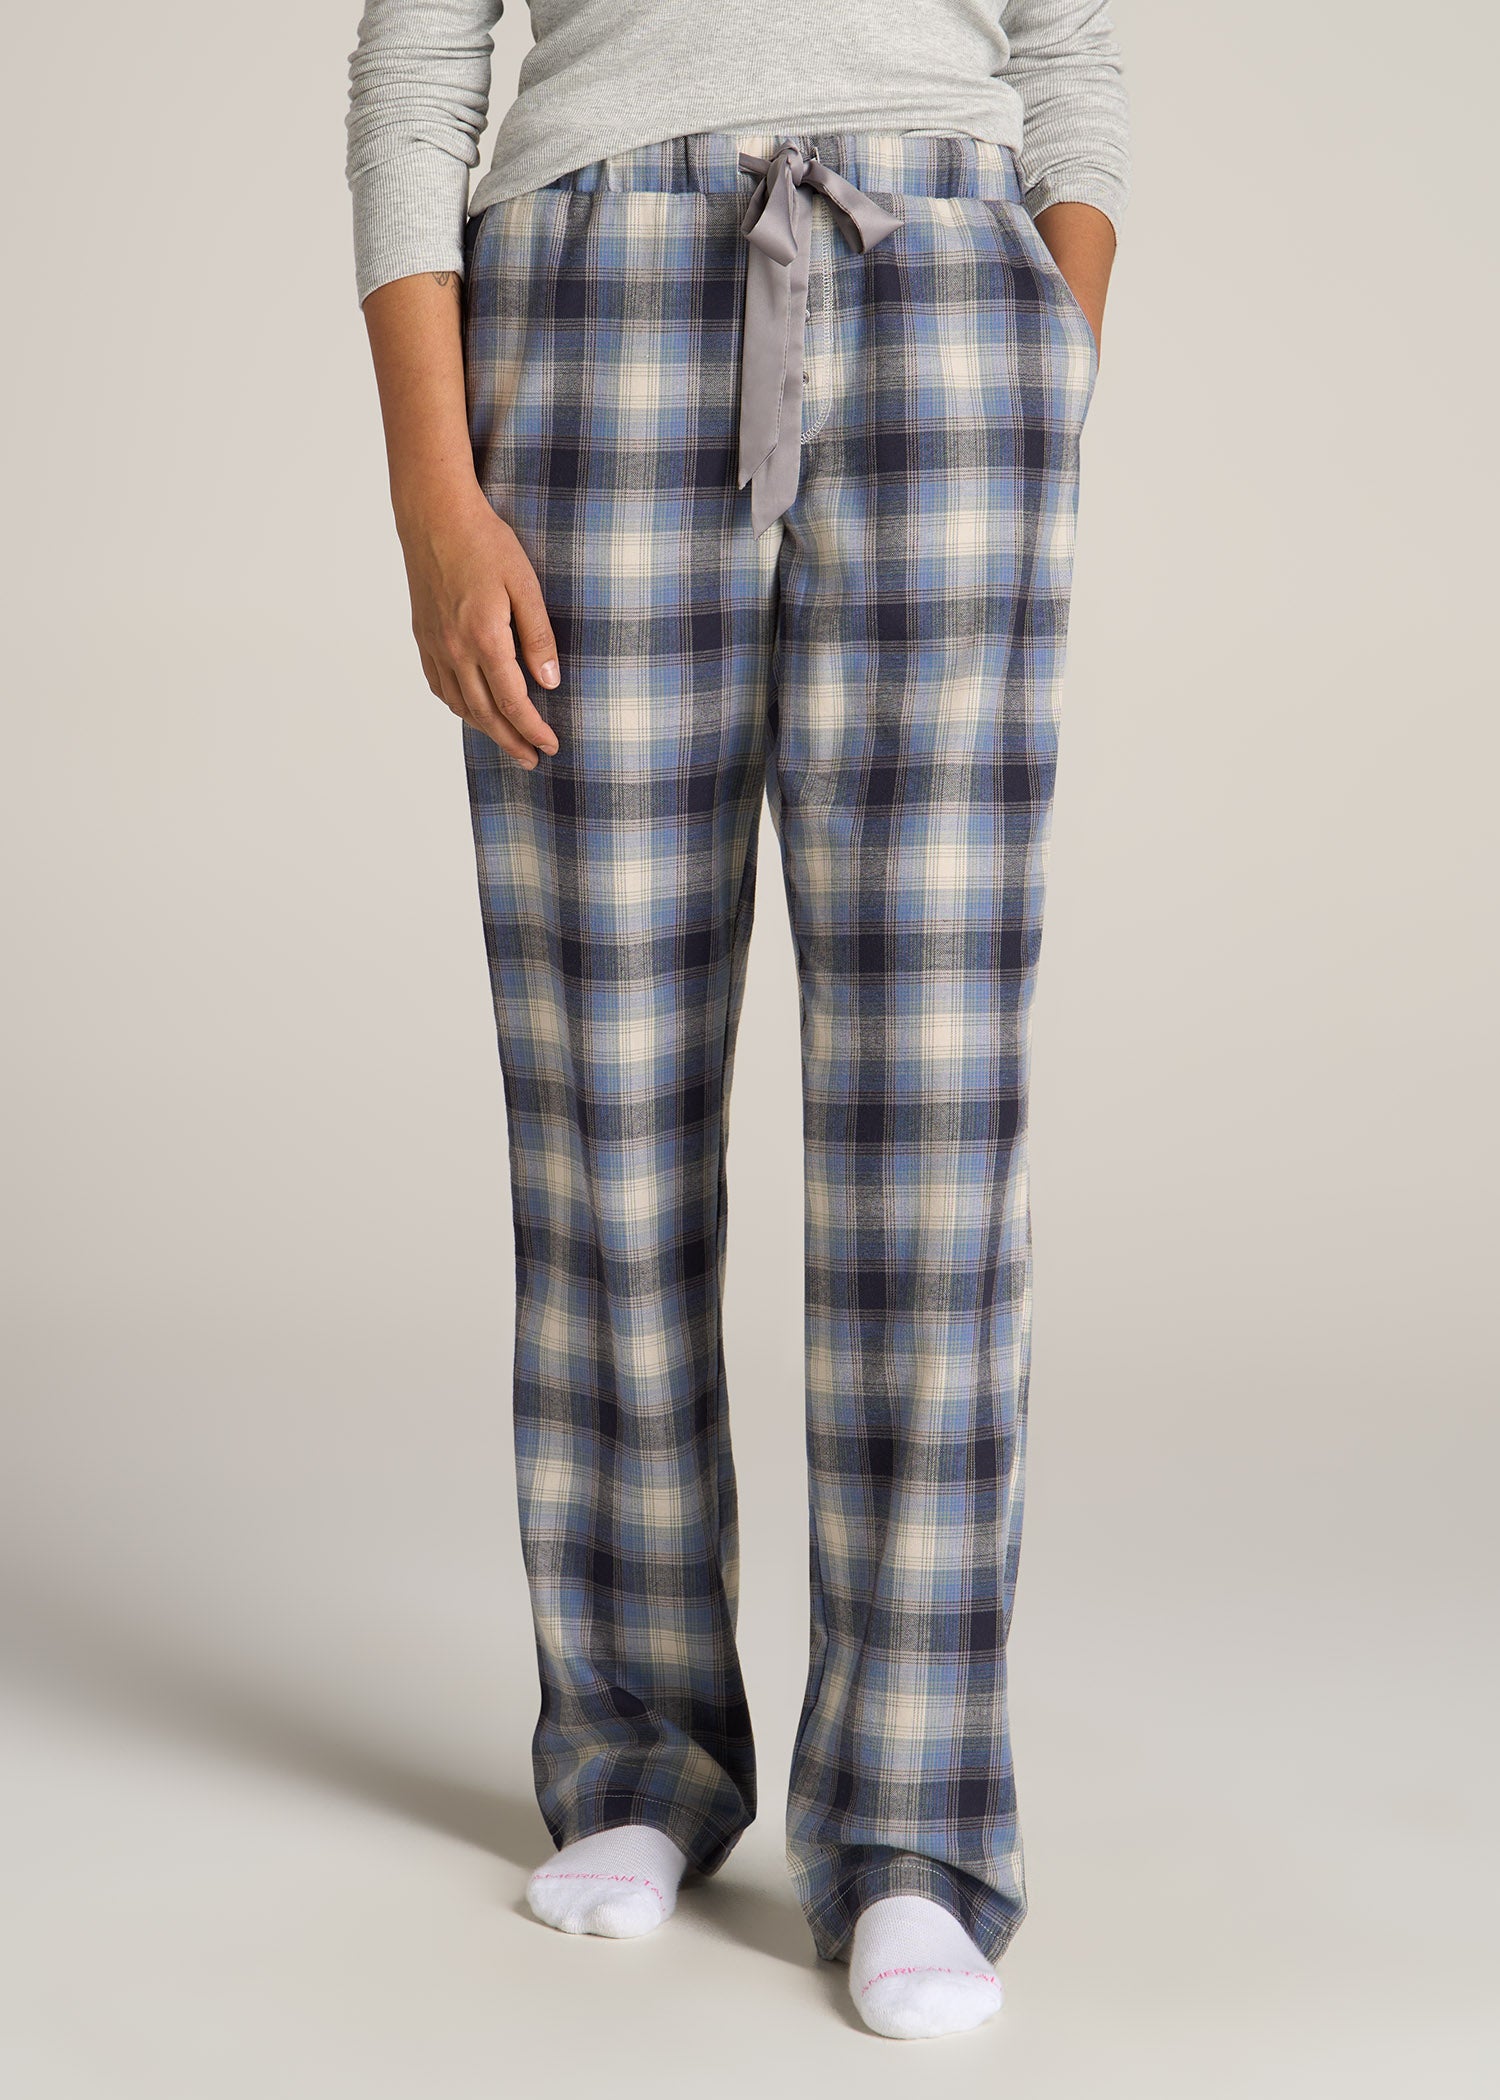 Women's Pajama Pants Sewing Pattern Christmas Pajamas Size XS to